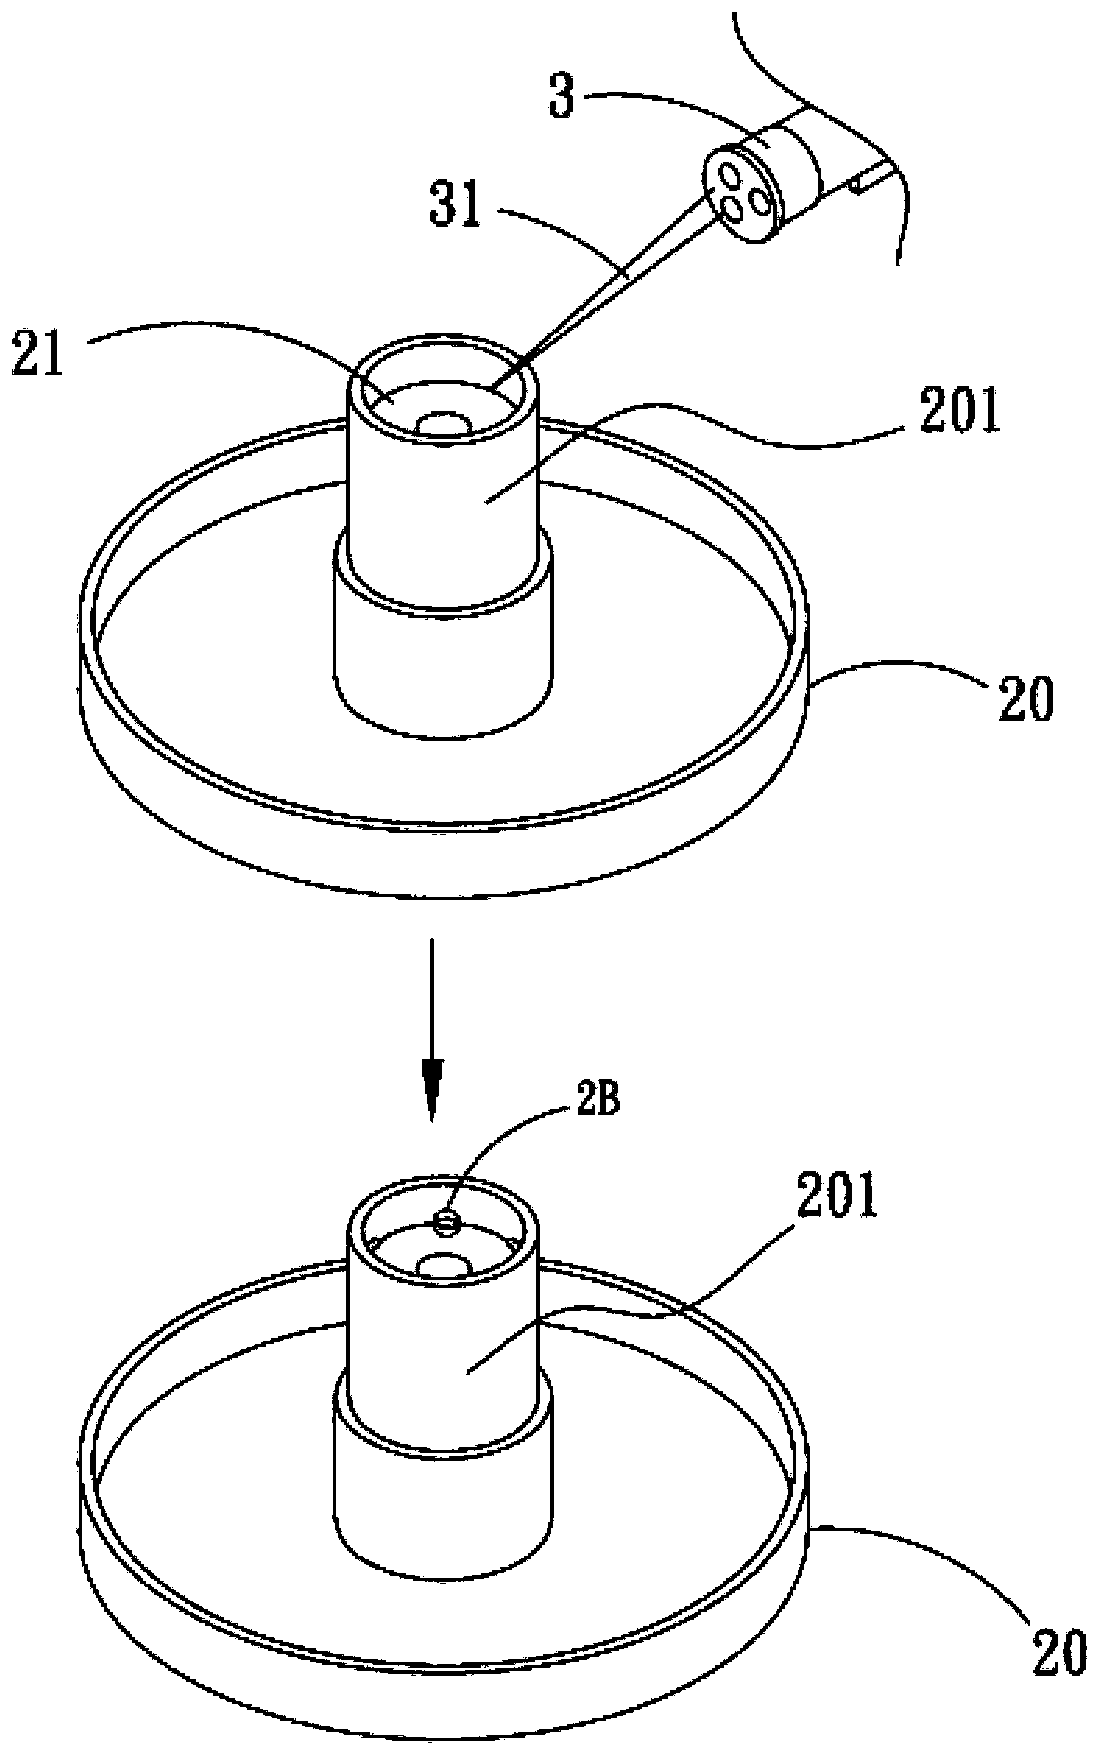 Combination method of shaft barrel and bearing